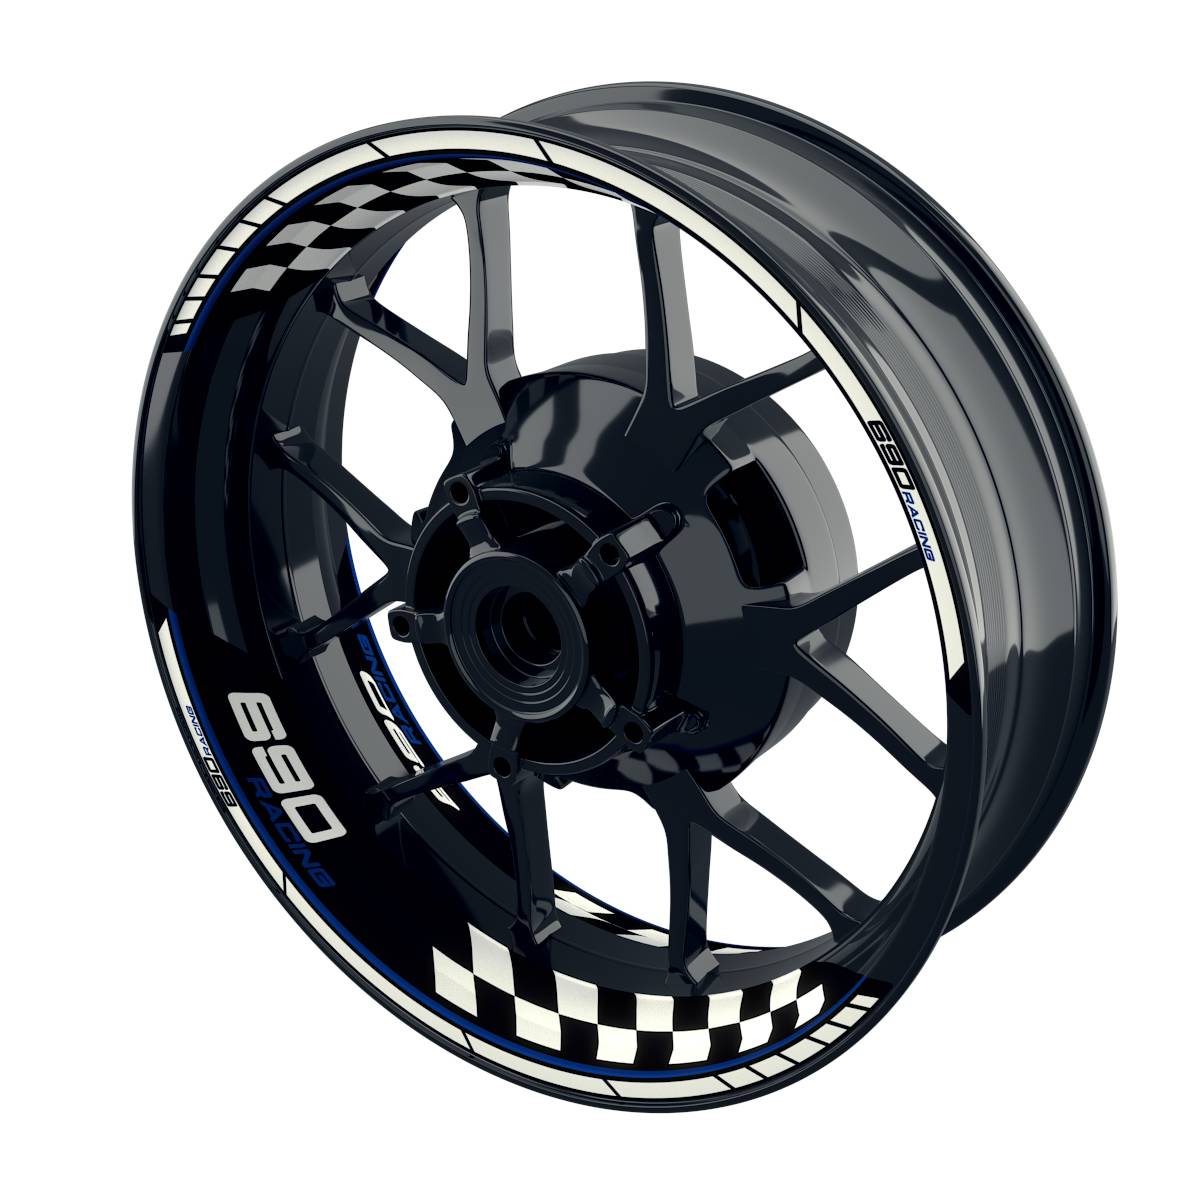 Racing 690 Grid Rim Decals Wheelsticker Premium splitted